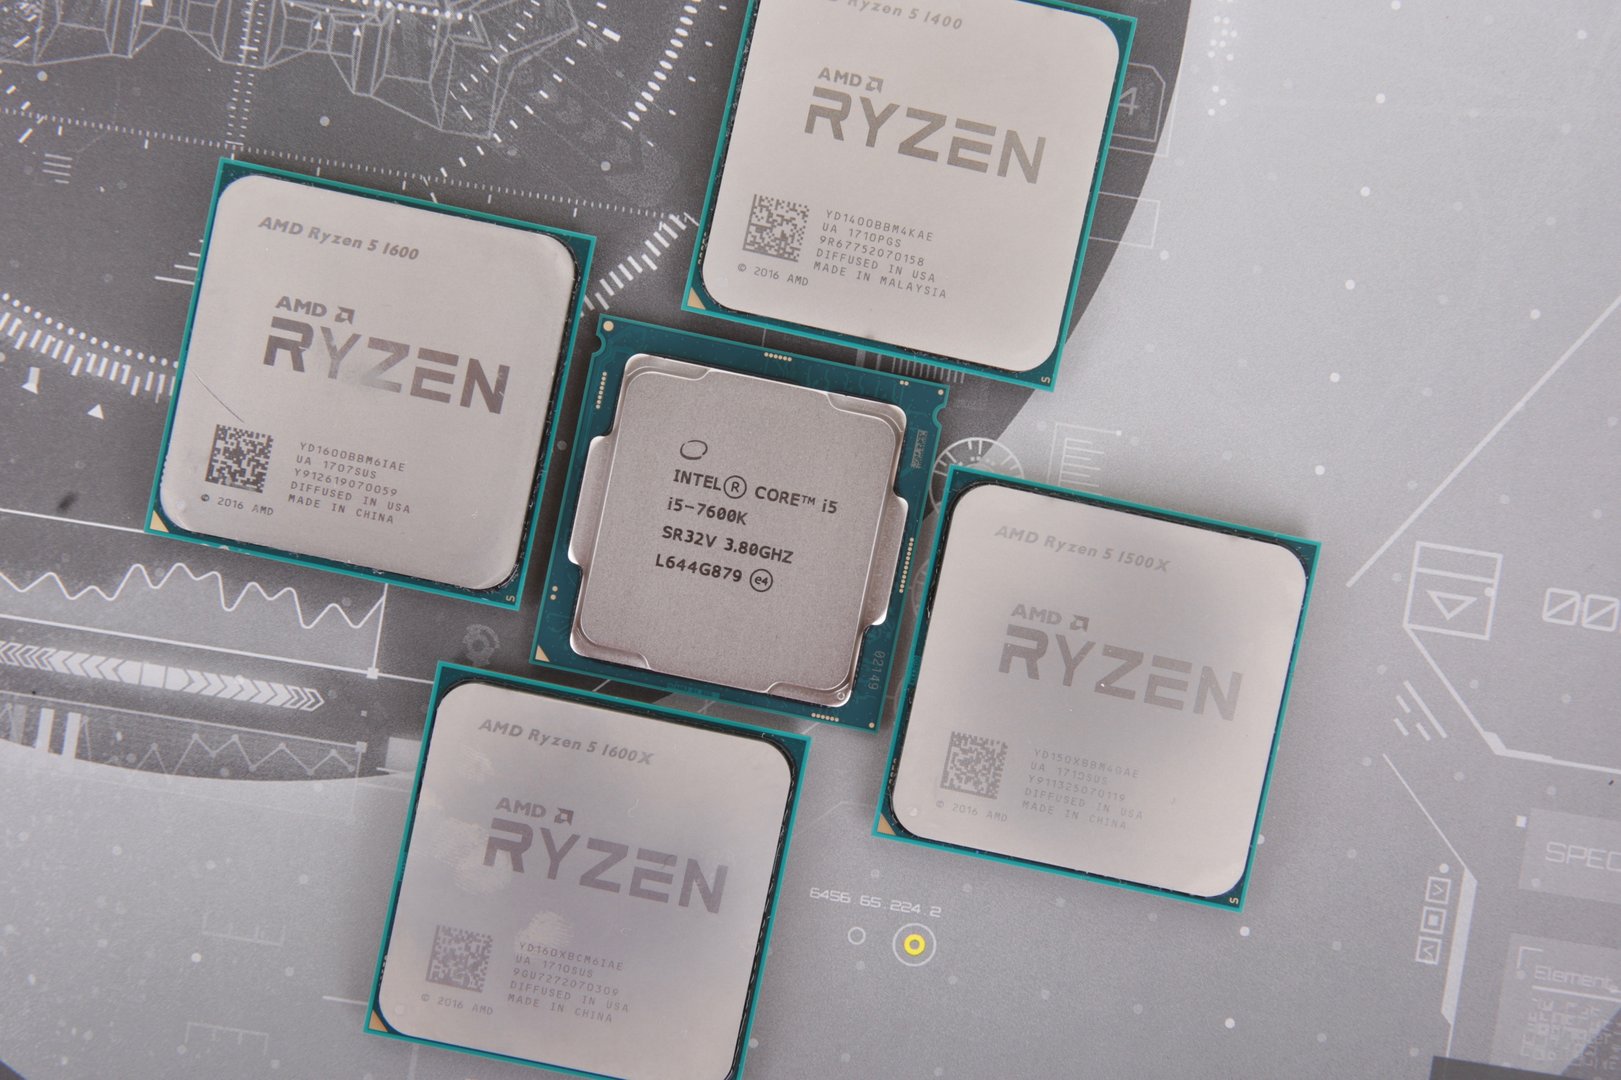 AMD Ryzen 5 1500x. AMD Ryzen 5 1500x Quad-Core Processor. AMD Ryzen 5 1500x Quad-Core Processor 3.50 GHZ. AMD Ryzen 5 1600x Six-Core Processor 3.60 GHZ. R5 7600